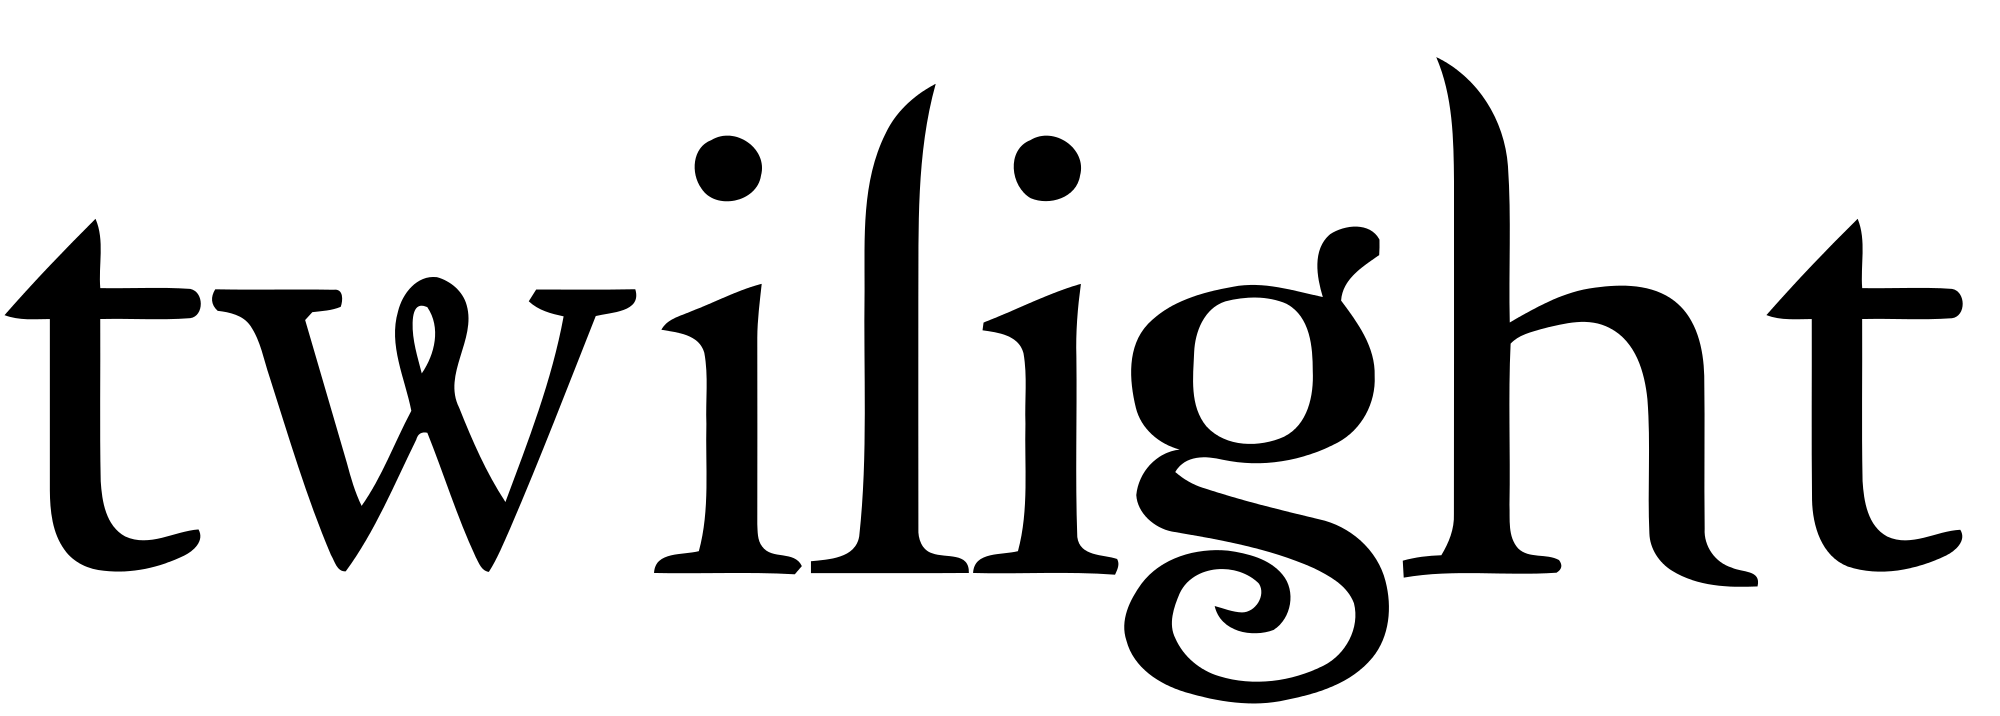 Twlight Logo - Twilight logo.svg